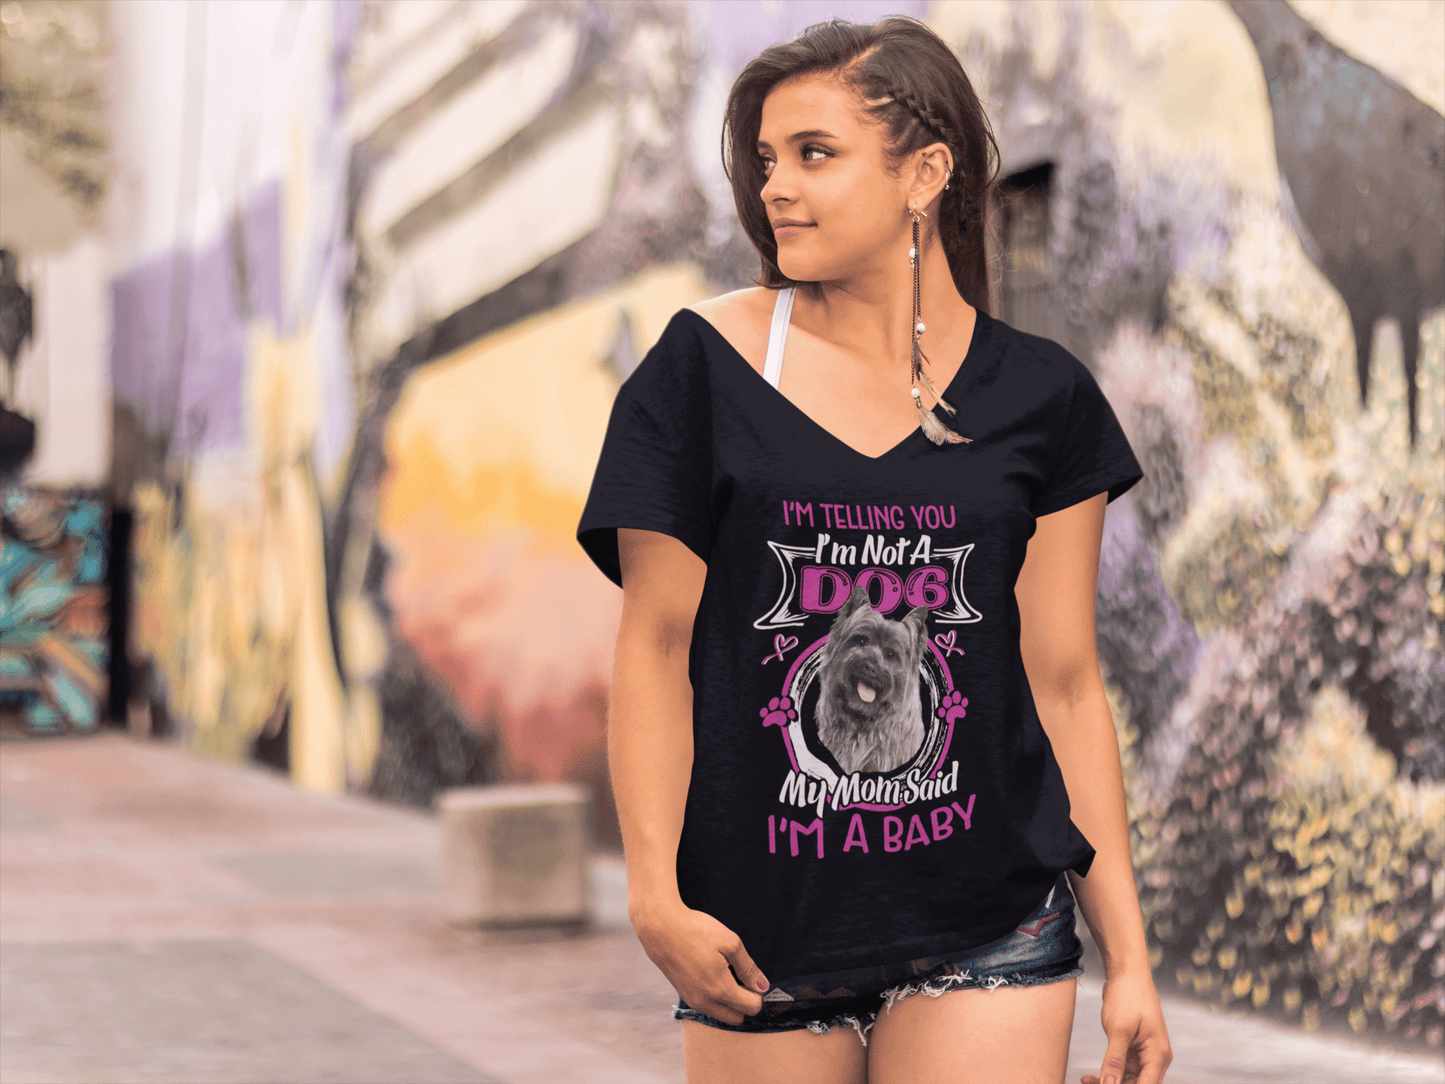 ULTRABASIC Damen-T-Shirt „I'm Telling You I'm Not a Cairn Terrier – My Mom Said I'm a Baby“ – Süßes Hündchenliebhaber-T-Shirt